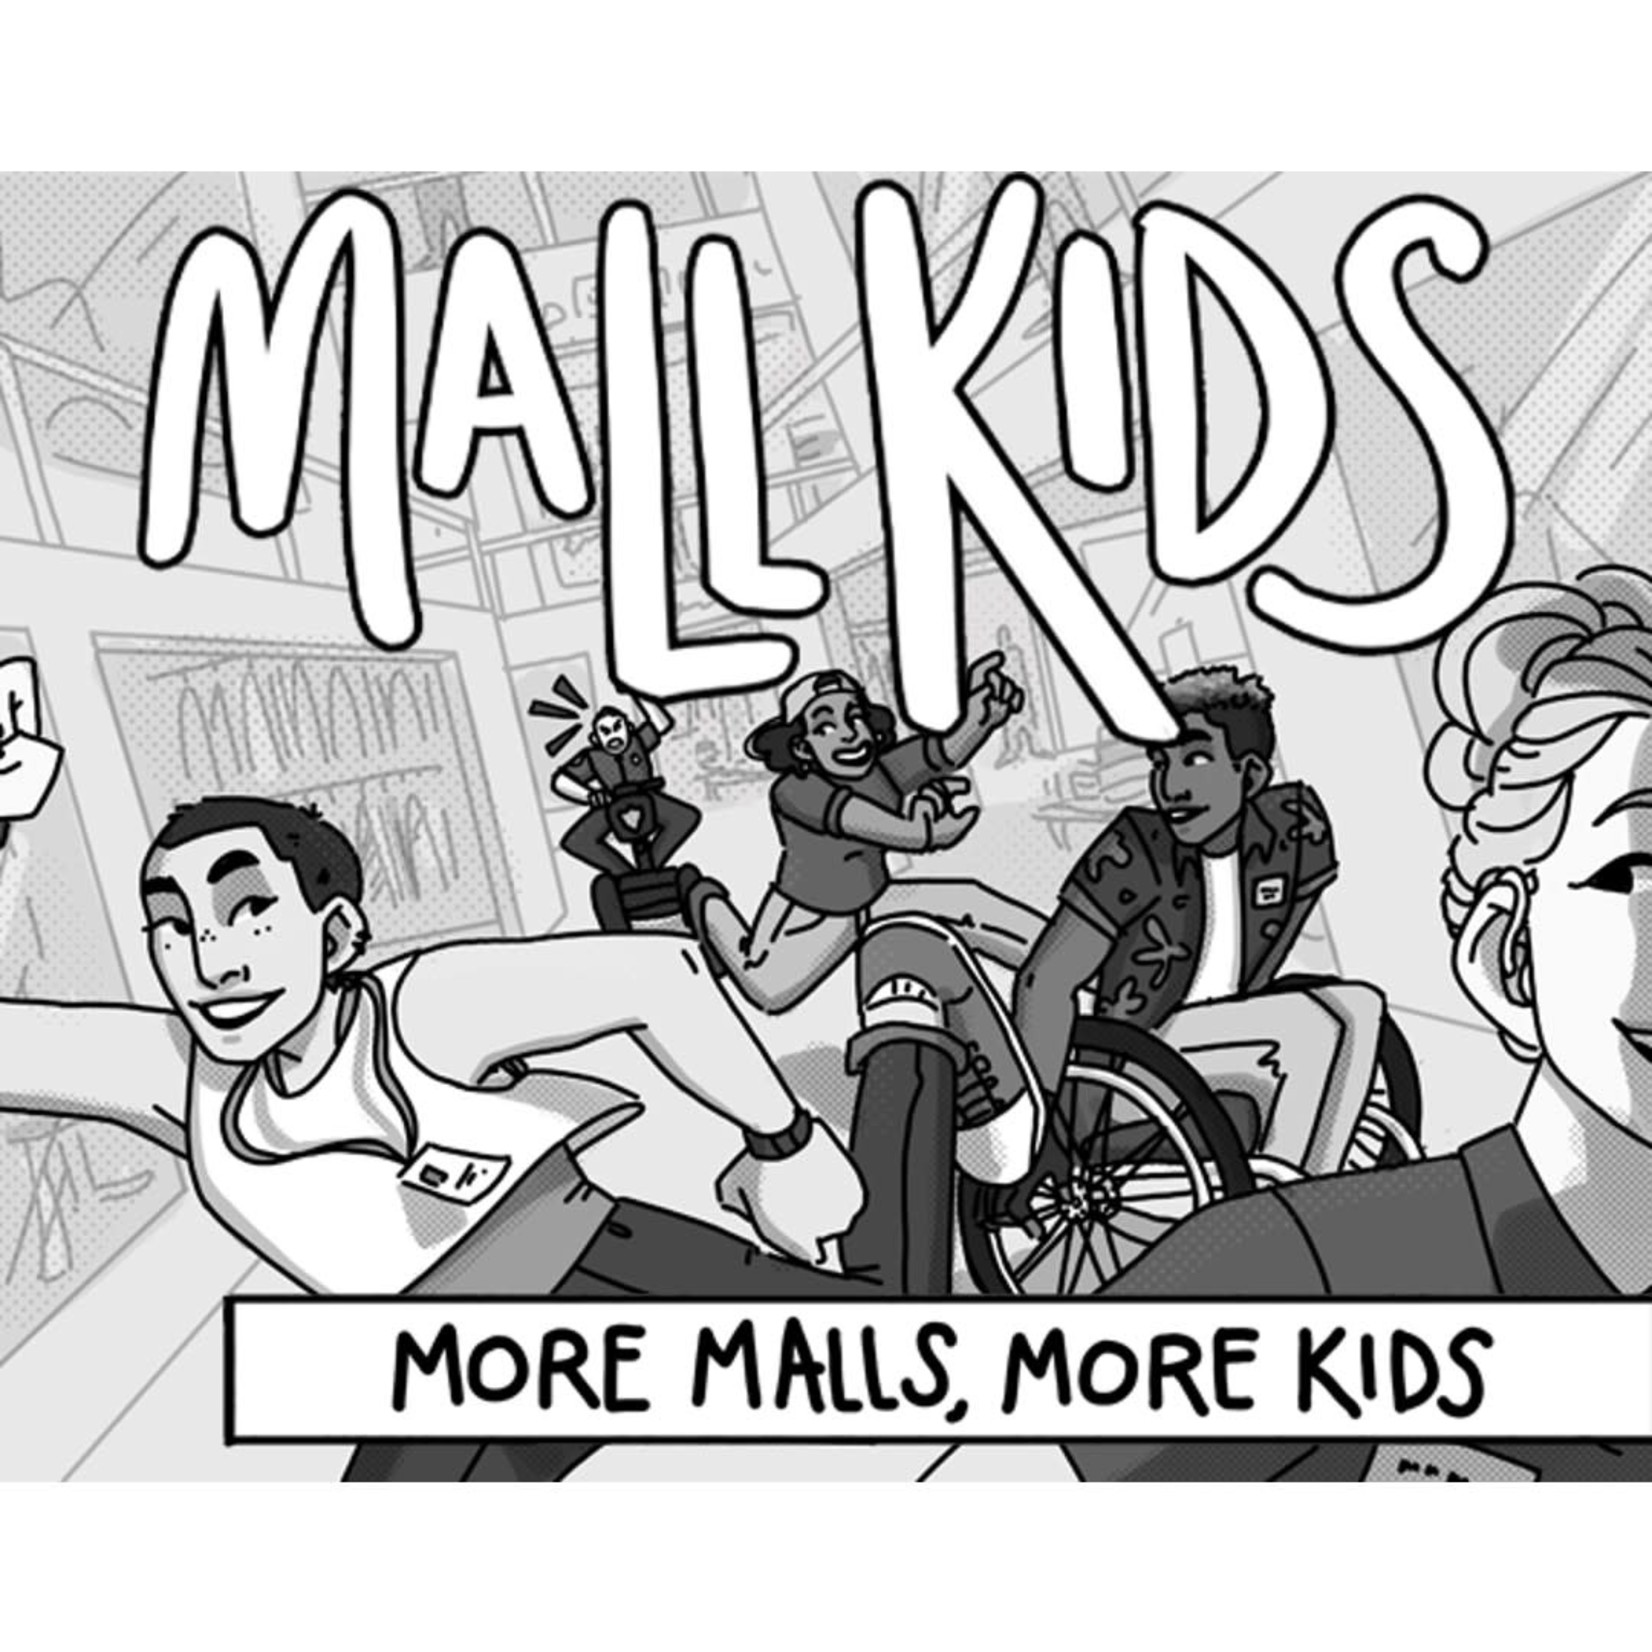 Matthew Gravelyn Mall Kids More Malls, More Kids